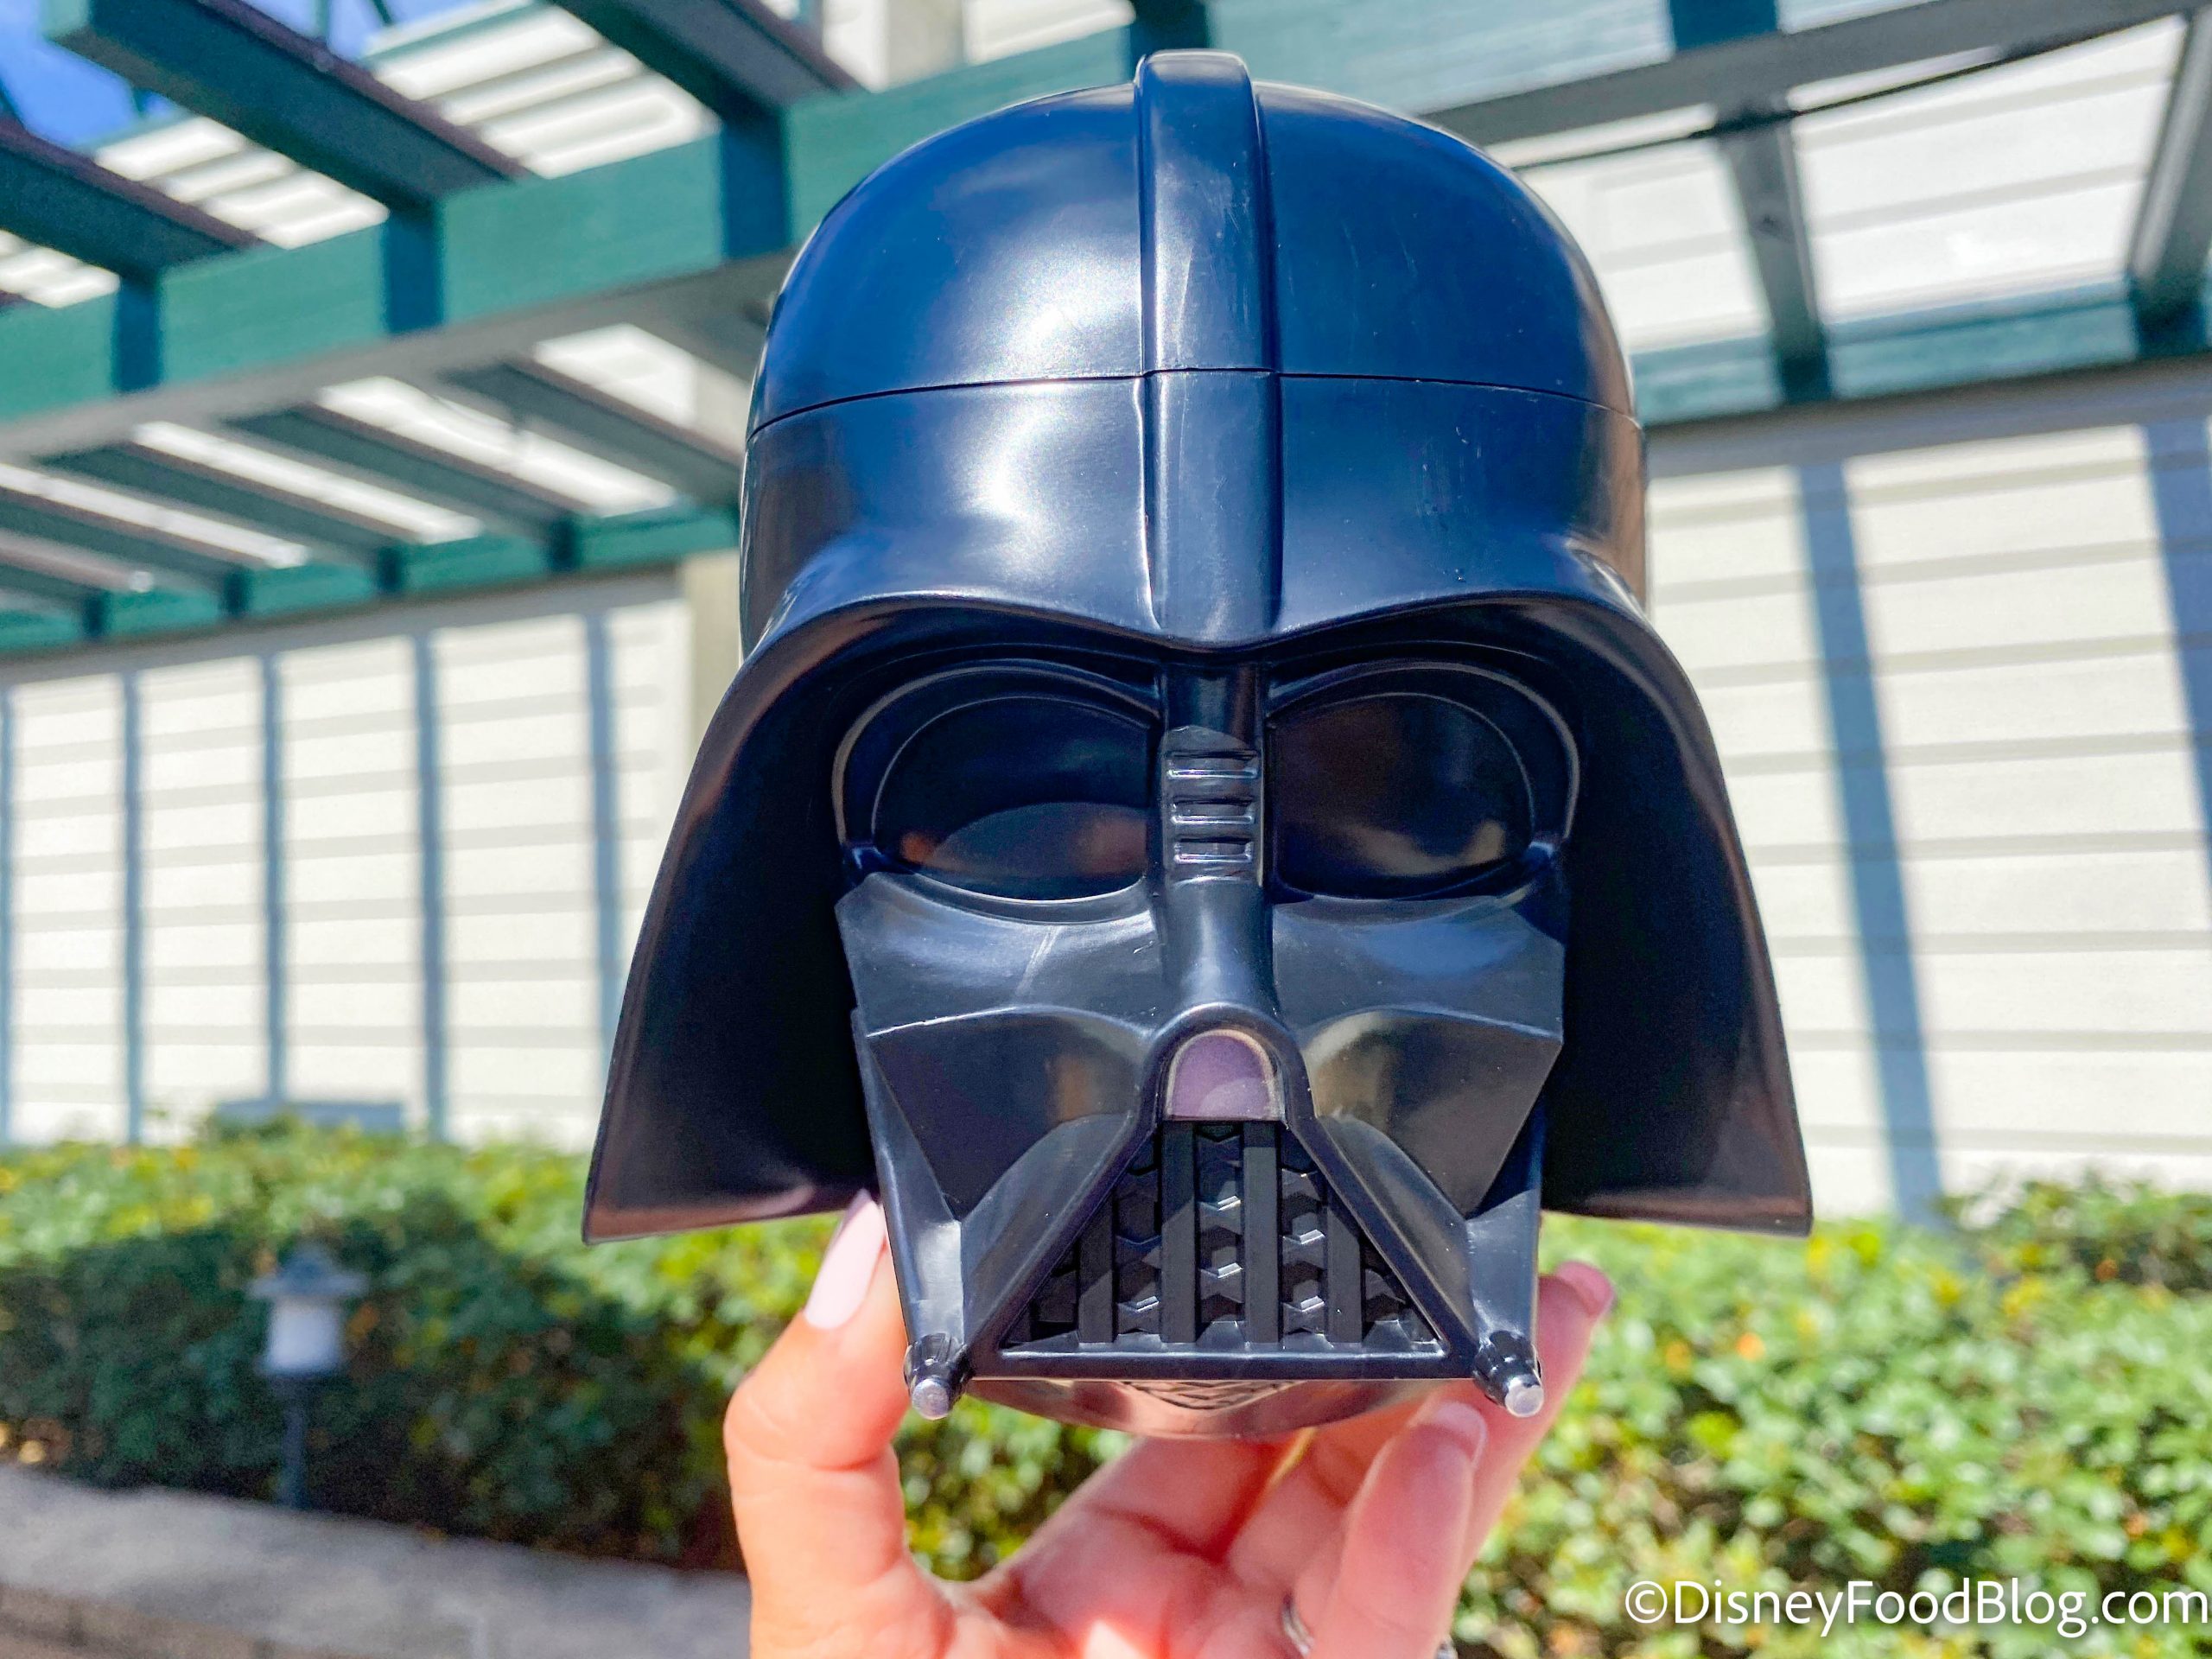 Large Darth Vader Star Wars cup Disney Store